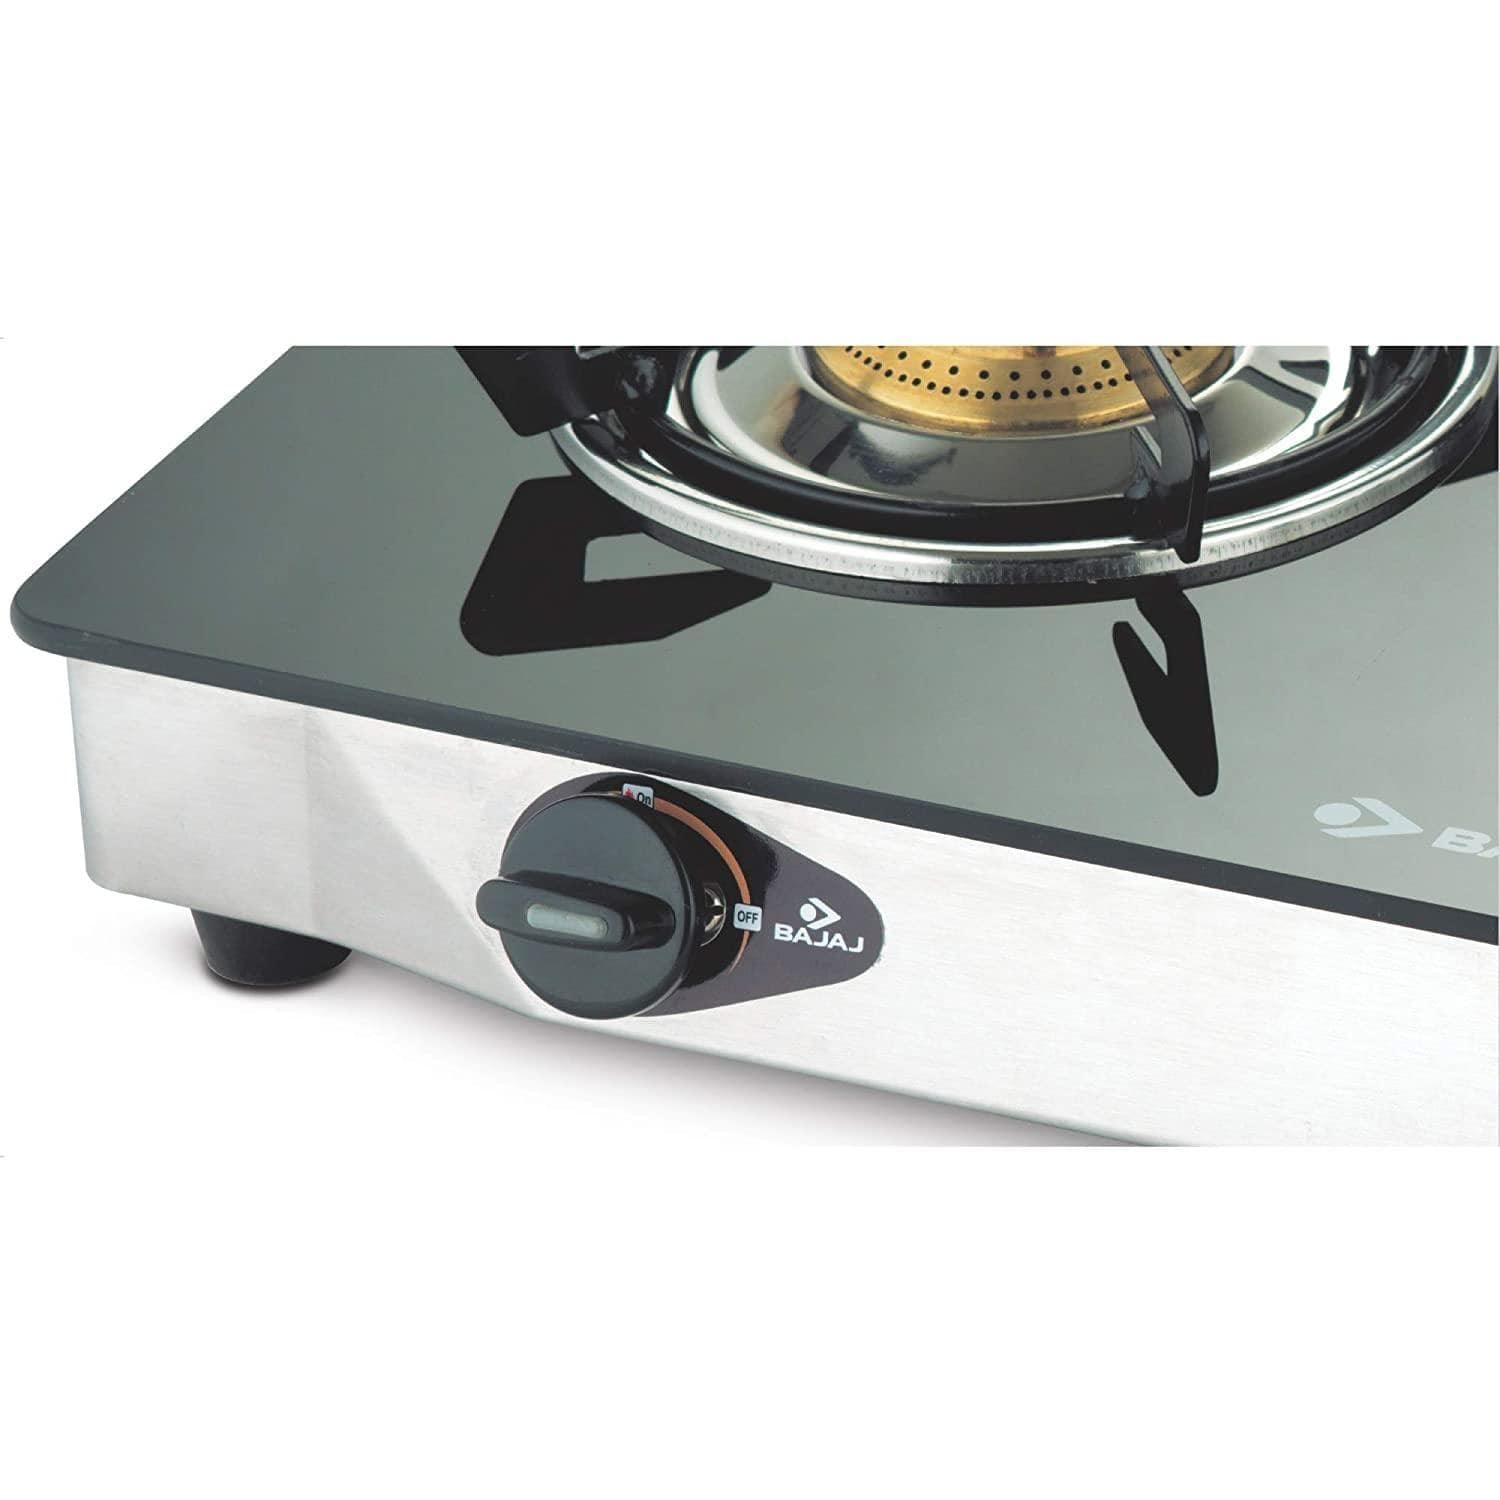 Bajaj CGX 2 ECO Stainless Steel Cooktop-Home & Kitchen Appliances-dealsplant